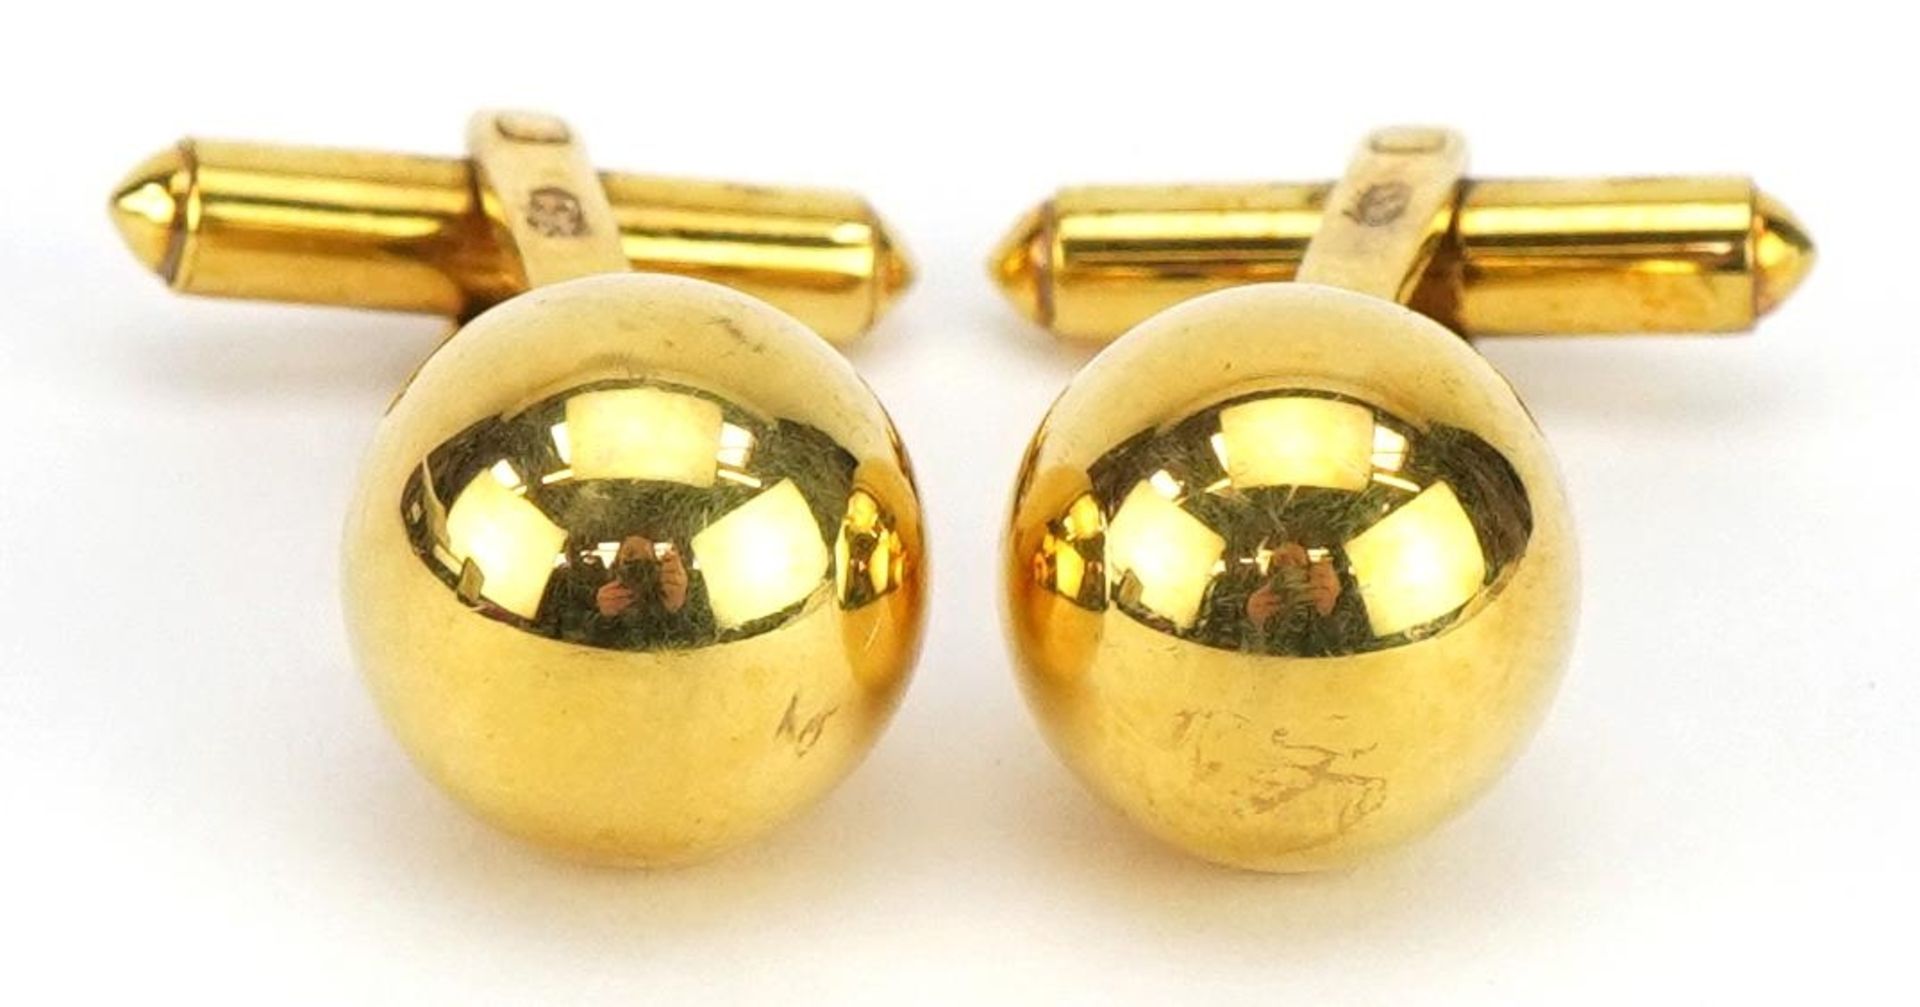 Pair of 9k gold ball cufflinks, 1.3cm in diameter, 9.5g